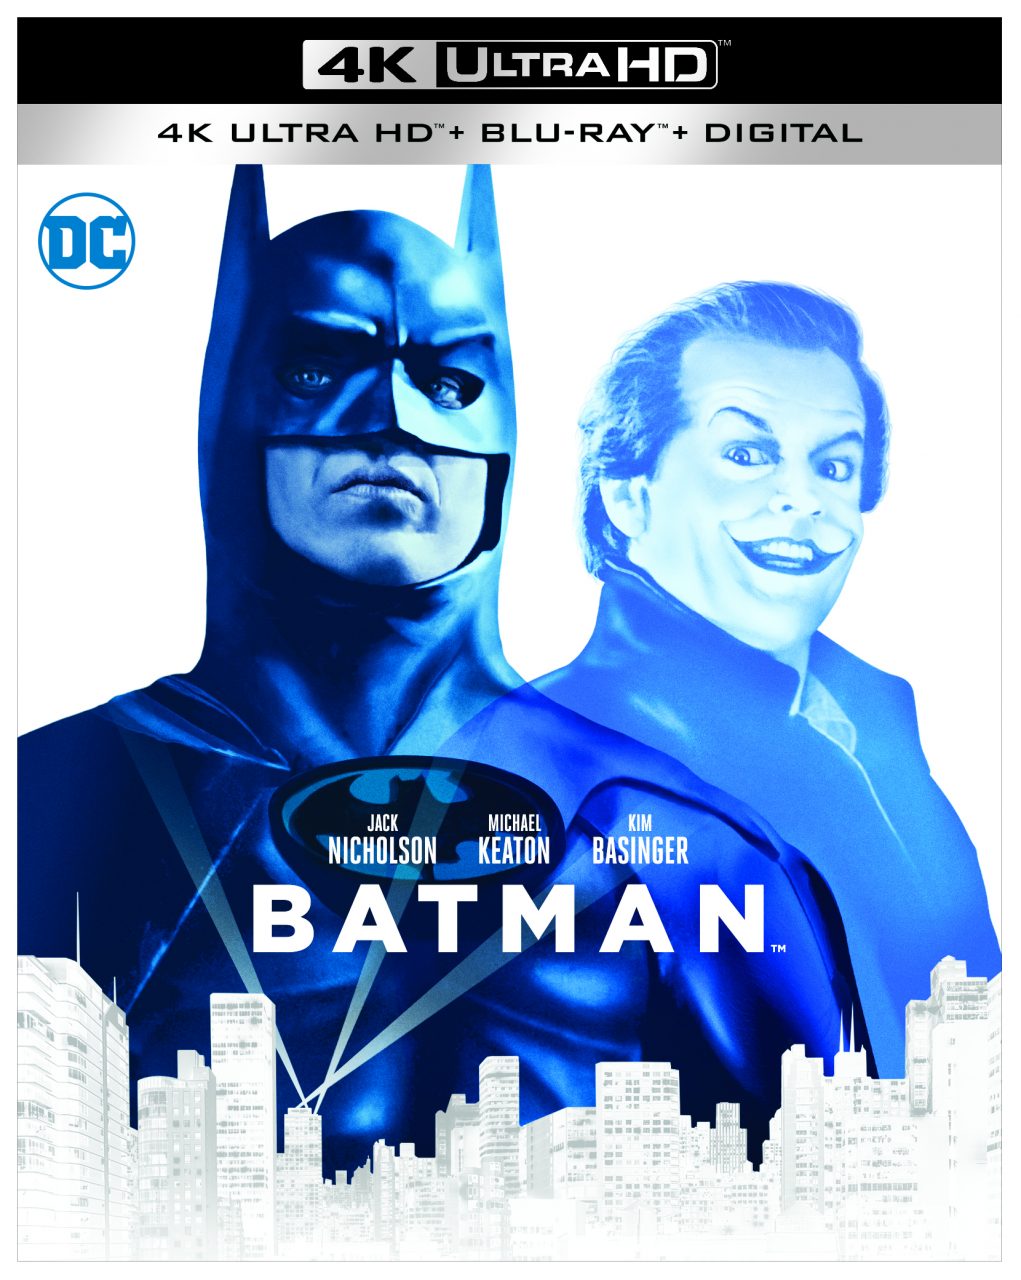 Batman 4K Ultra HD cover (Warner Bros. Home Entertainment)